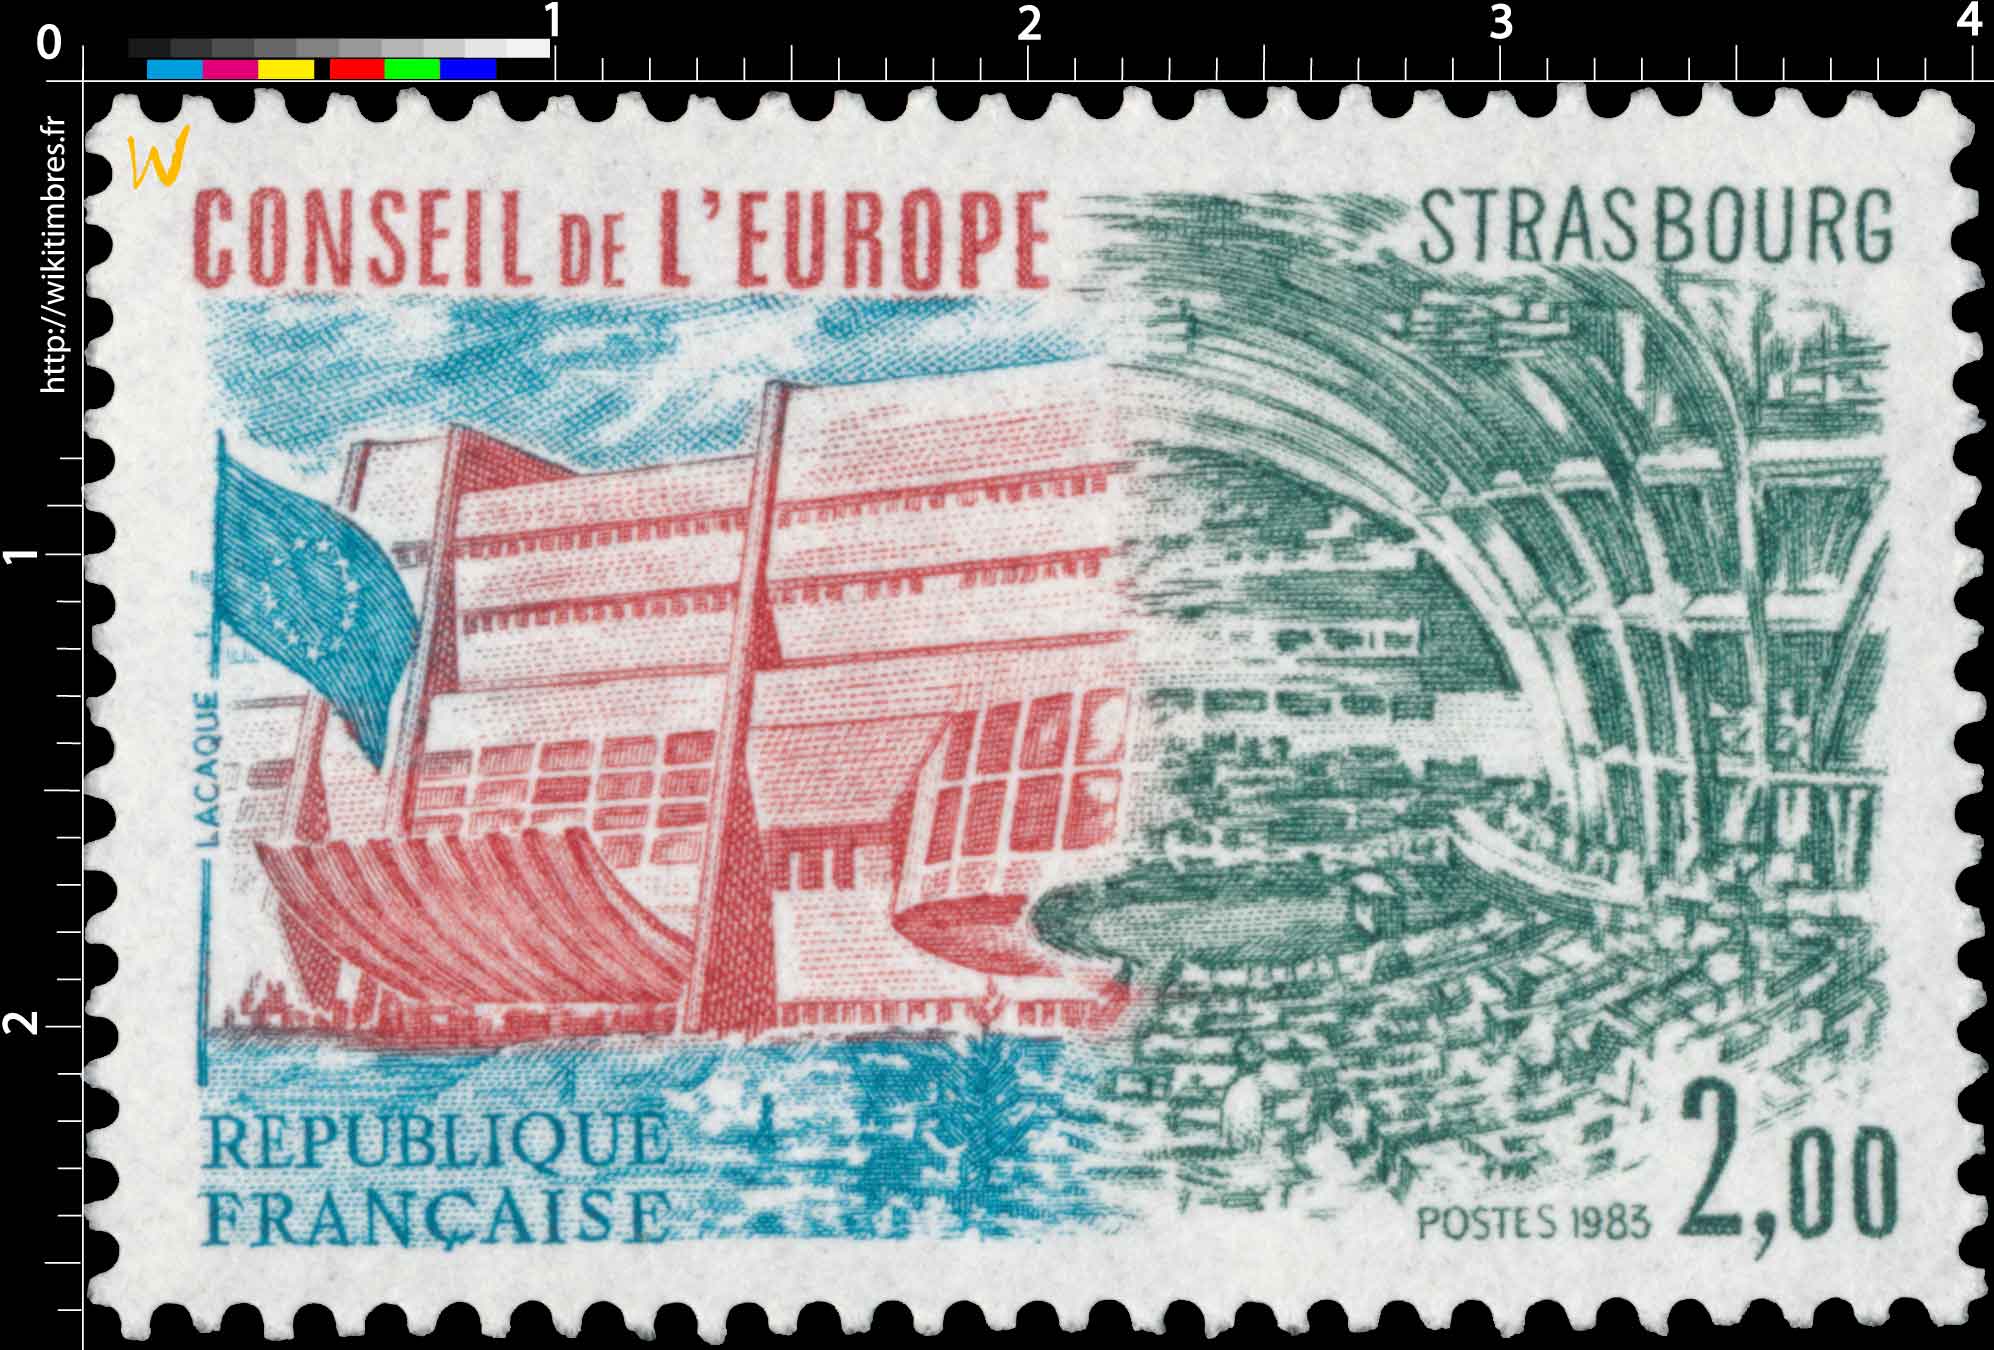 1983 CONSEIL DE L'EUROPE STRASBOURG